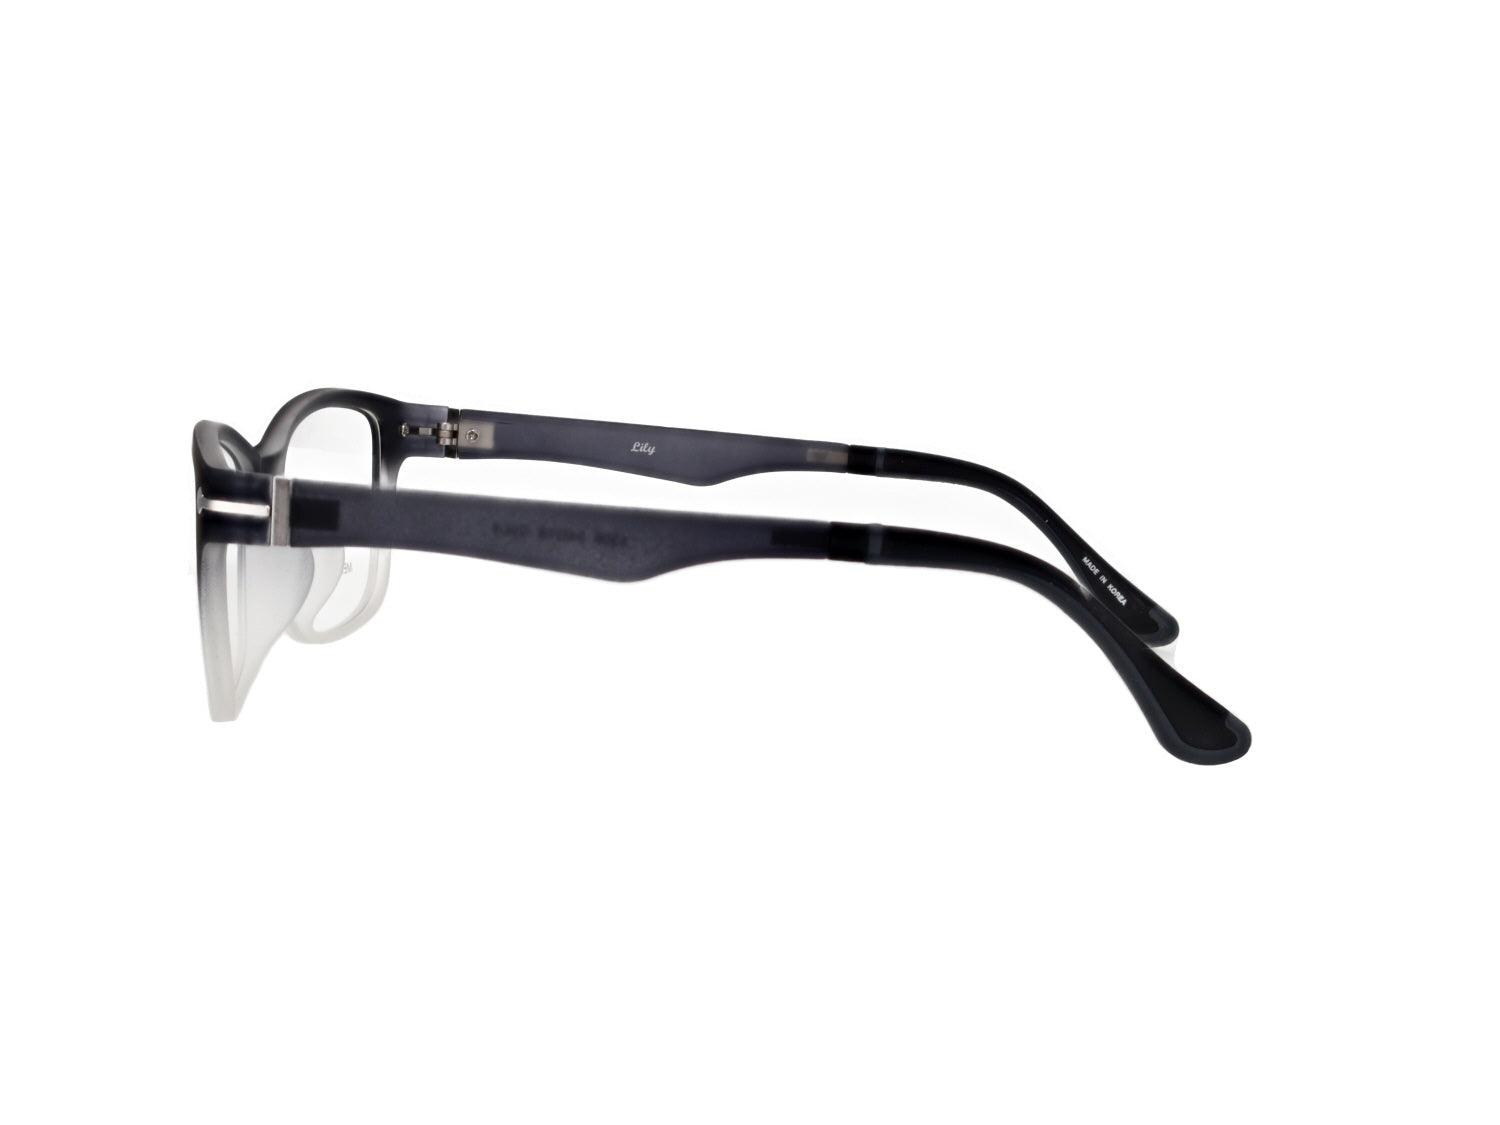 Lily Eyeglasses, 1306 C4 - Vision 770